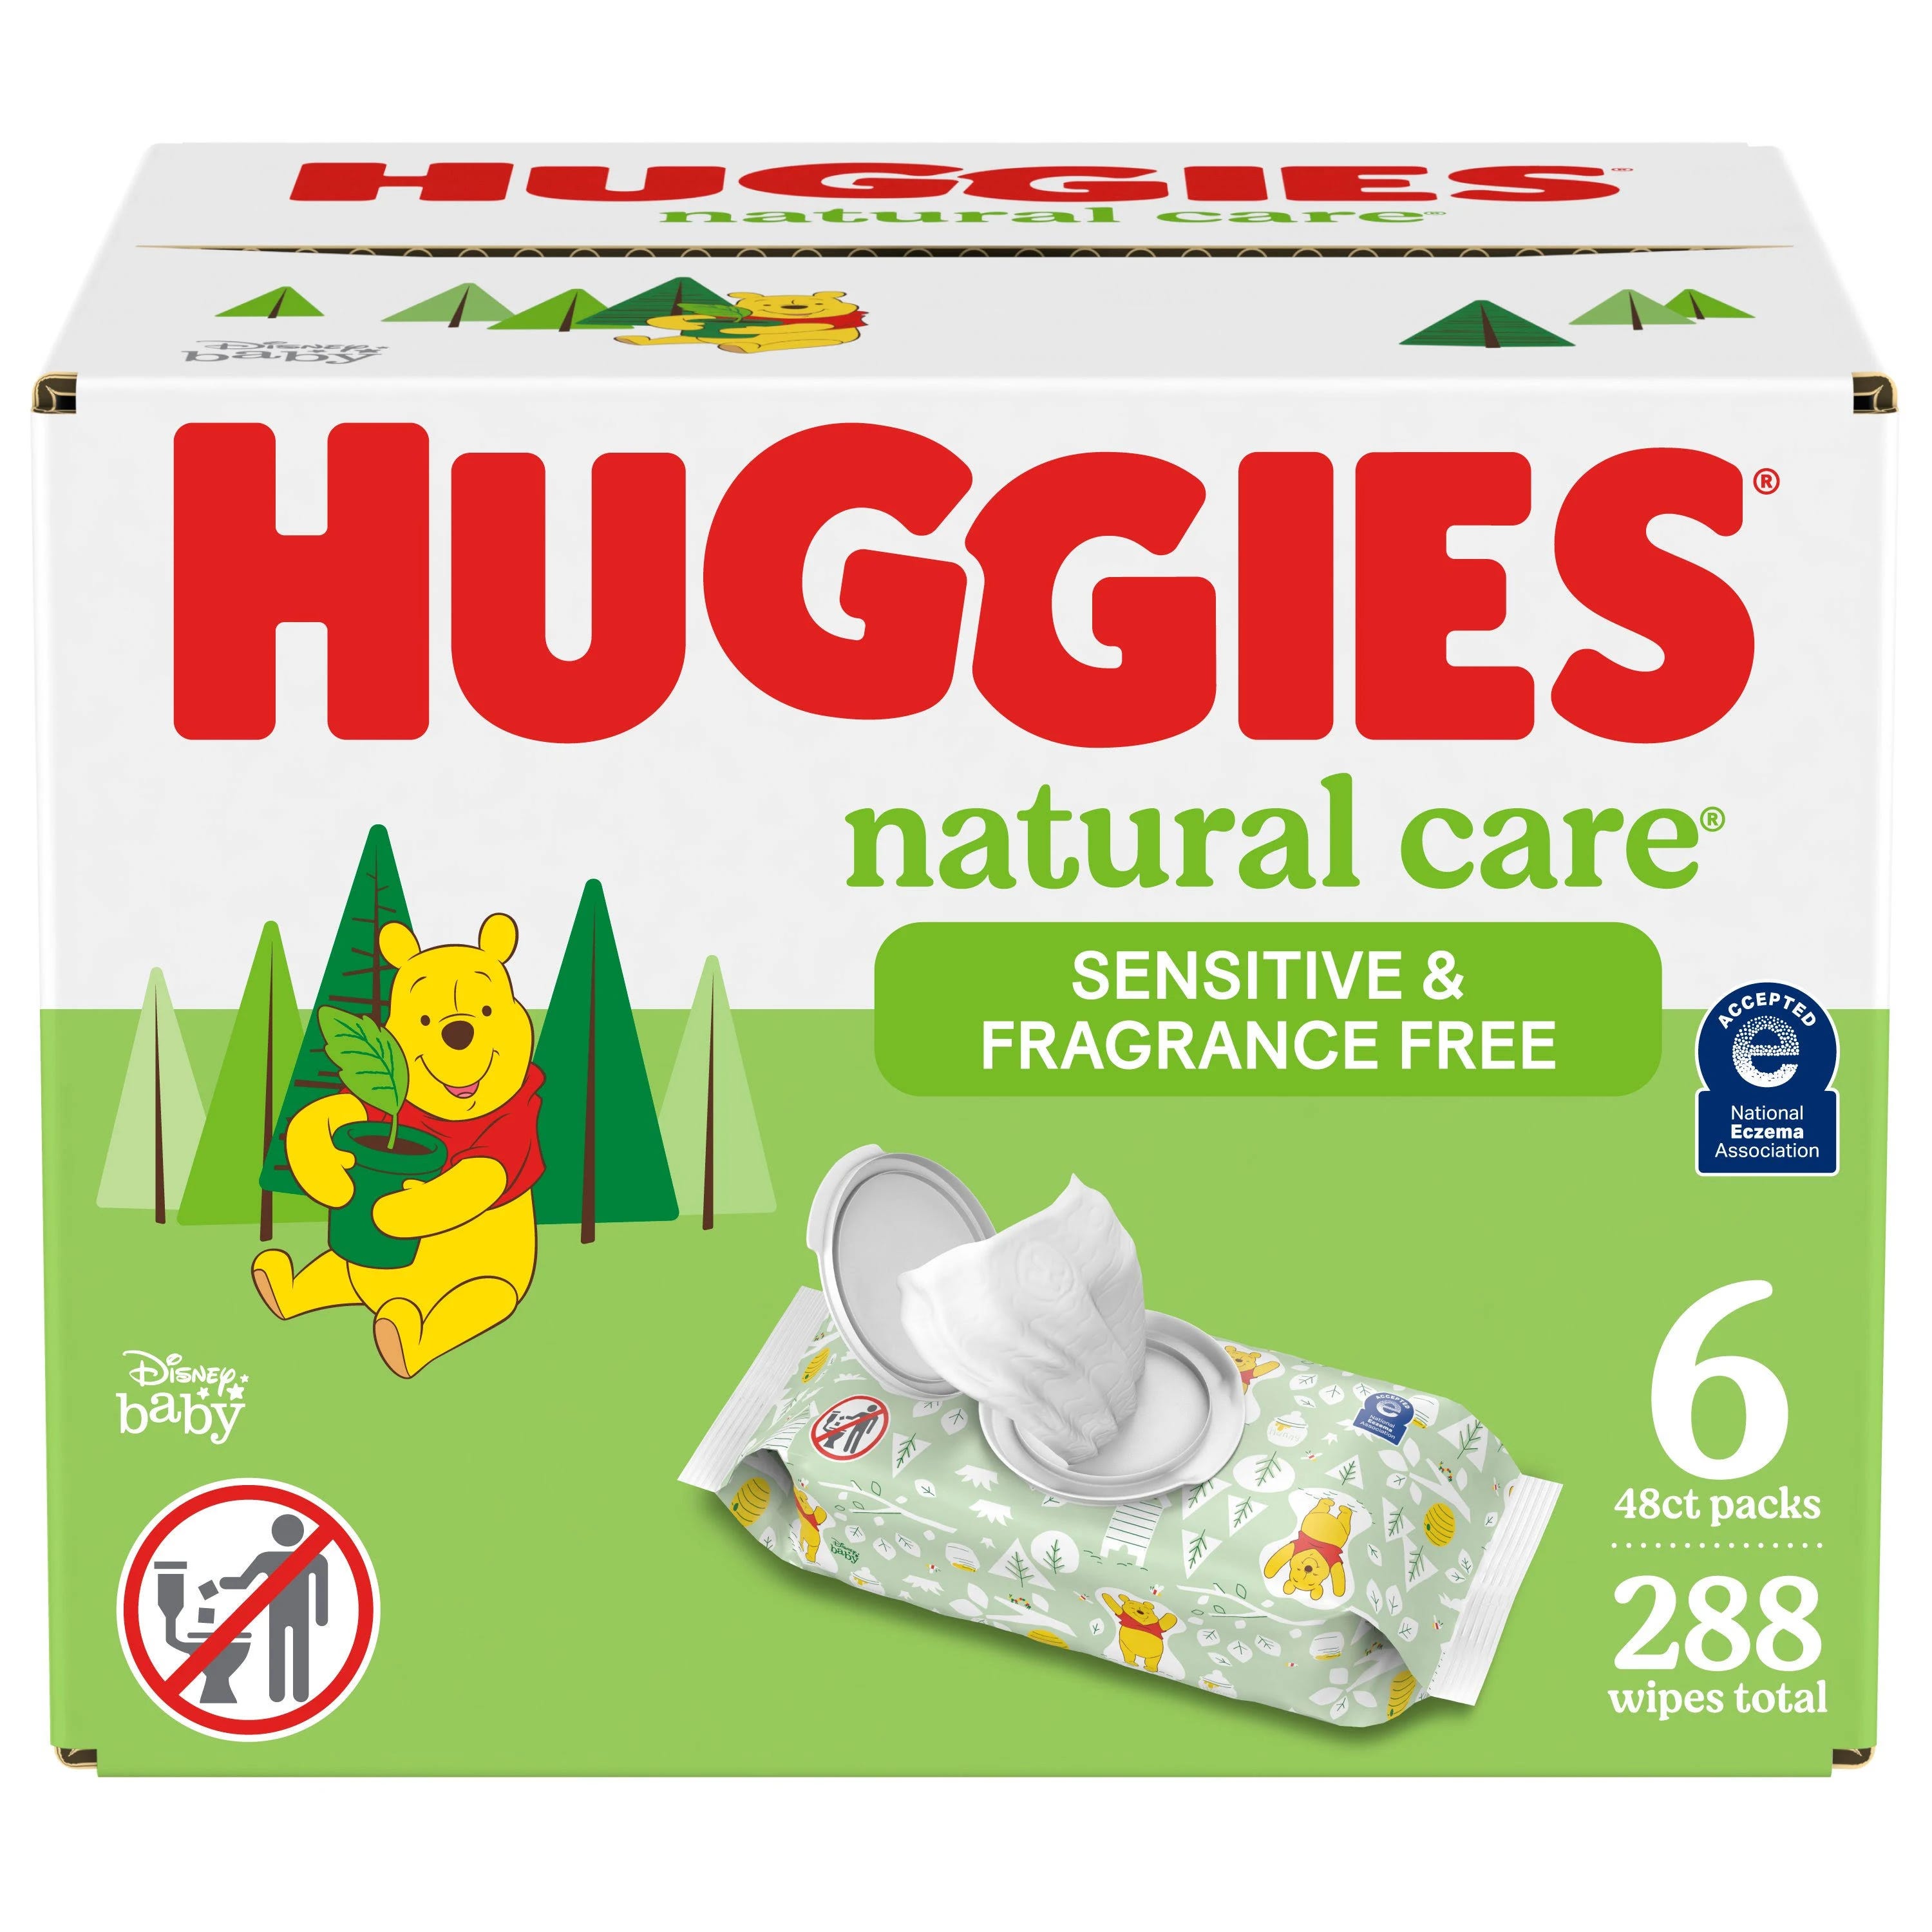 Huggies Natural Care Sensitive Wipes – Plant-Based, Fragrance-Free, and Gentle for Sensitive Skin | Image